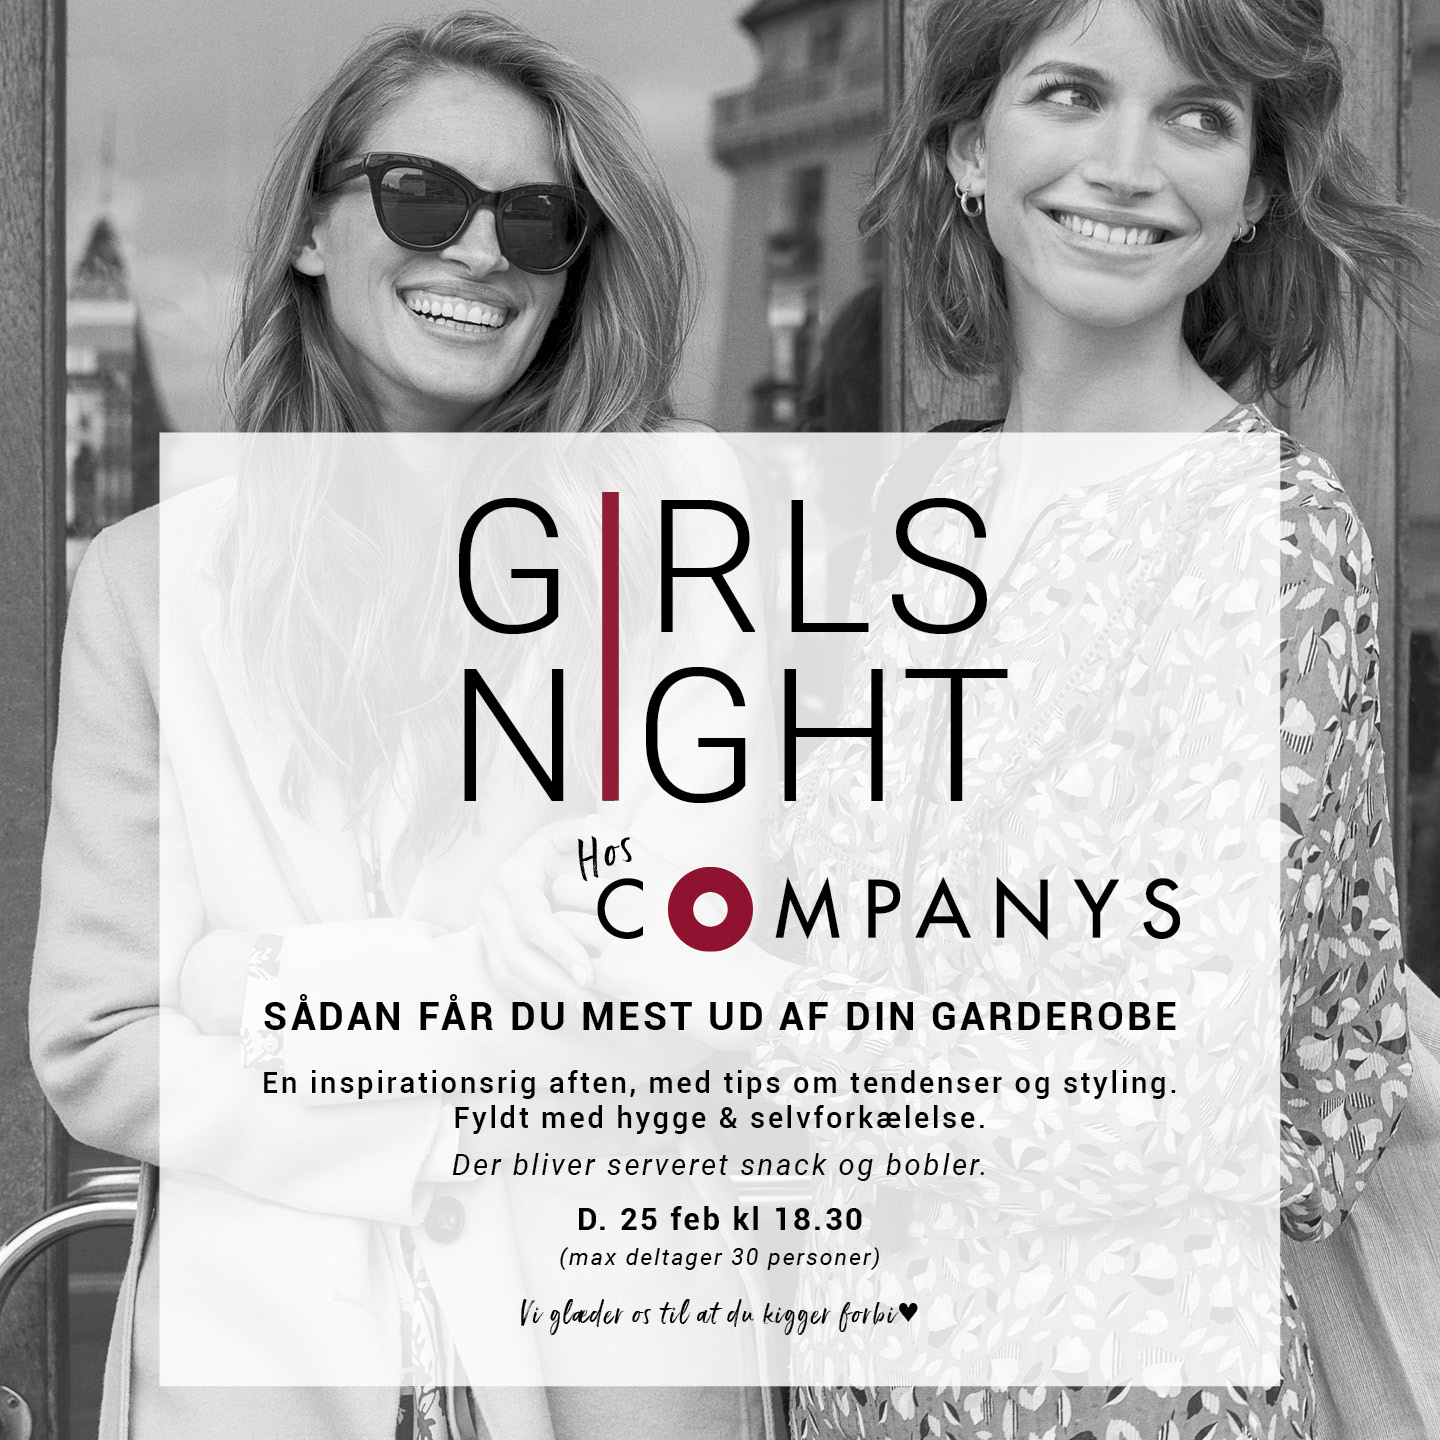 Girls Night hos Companys